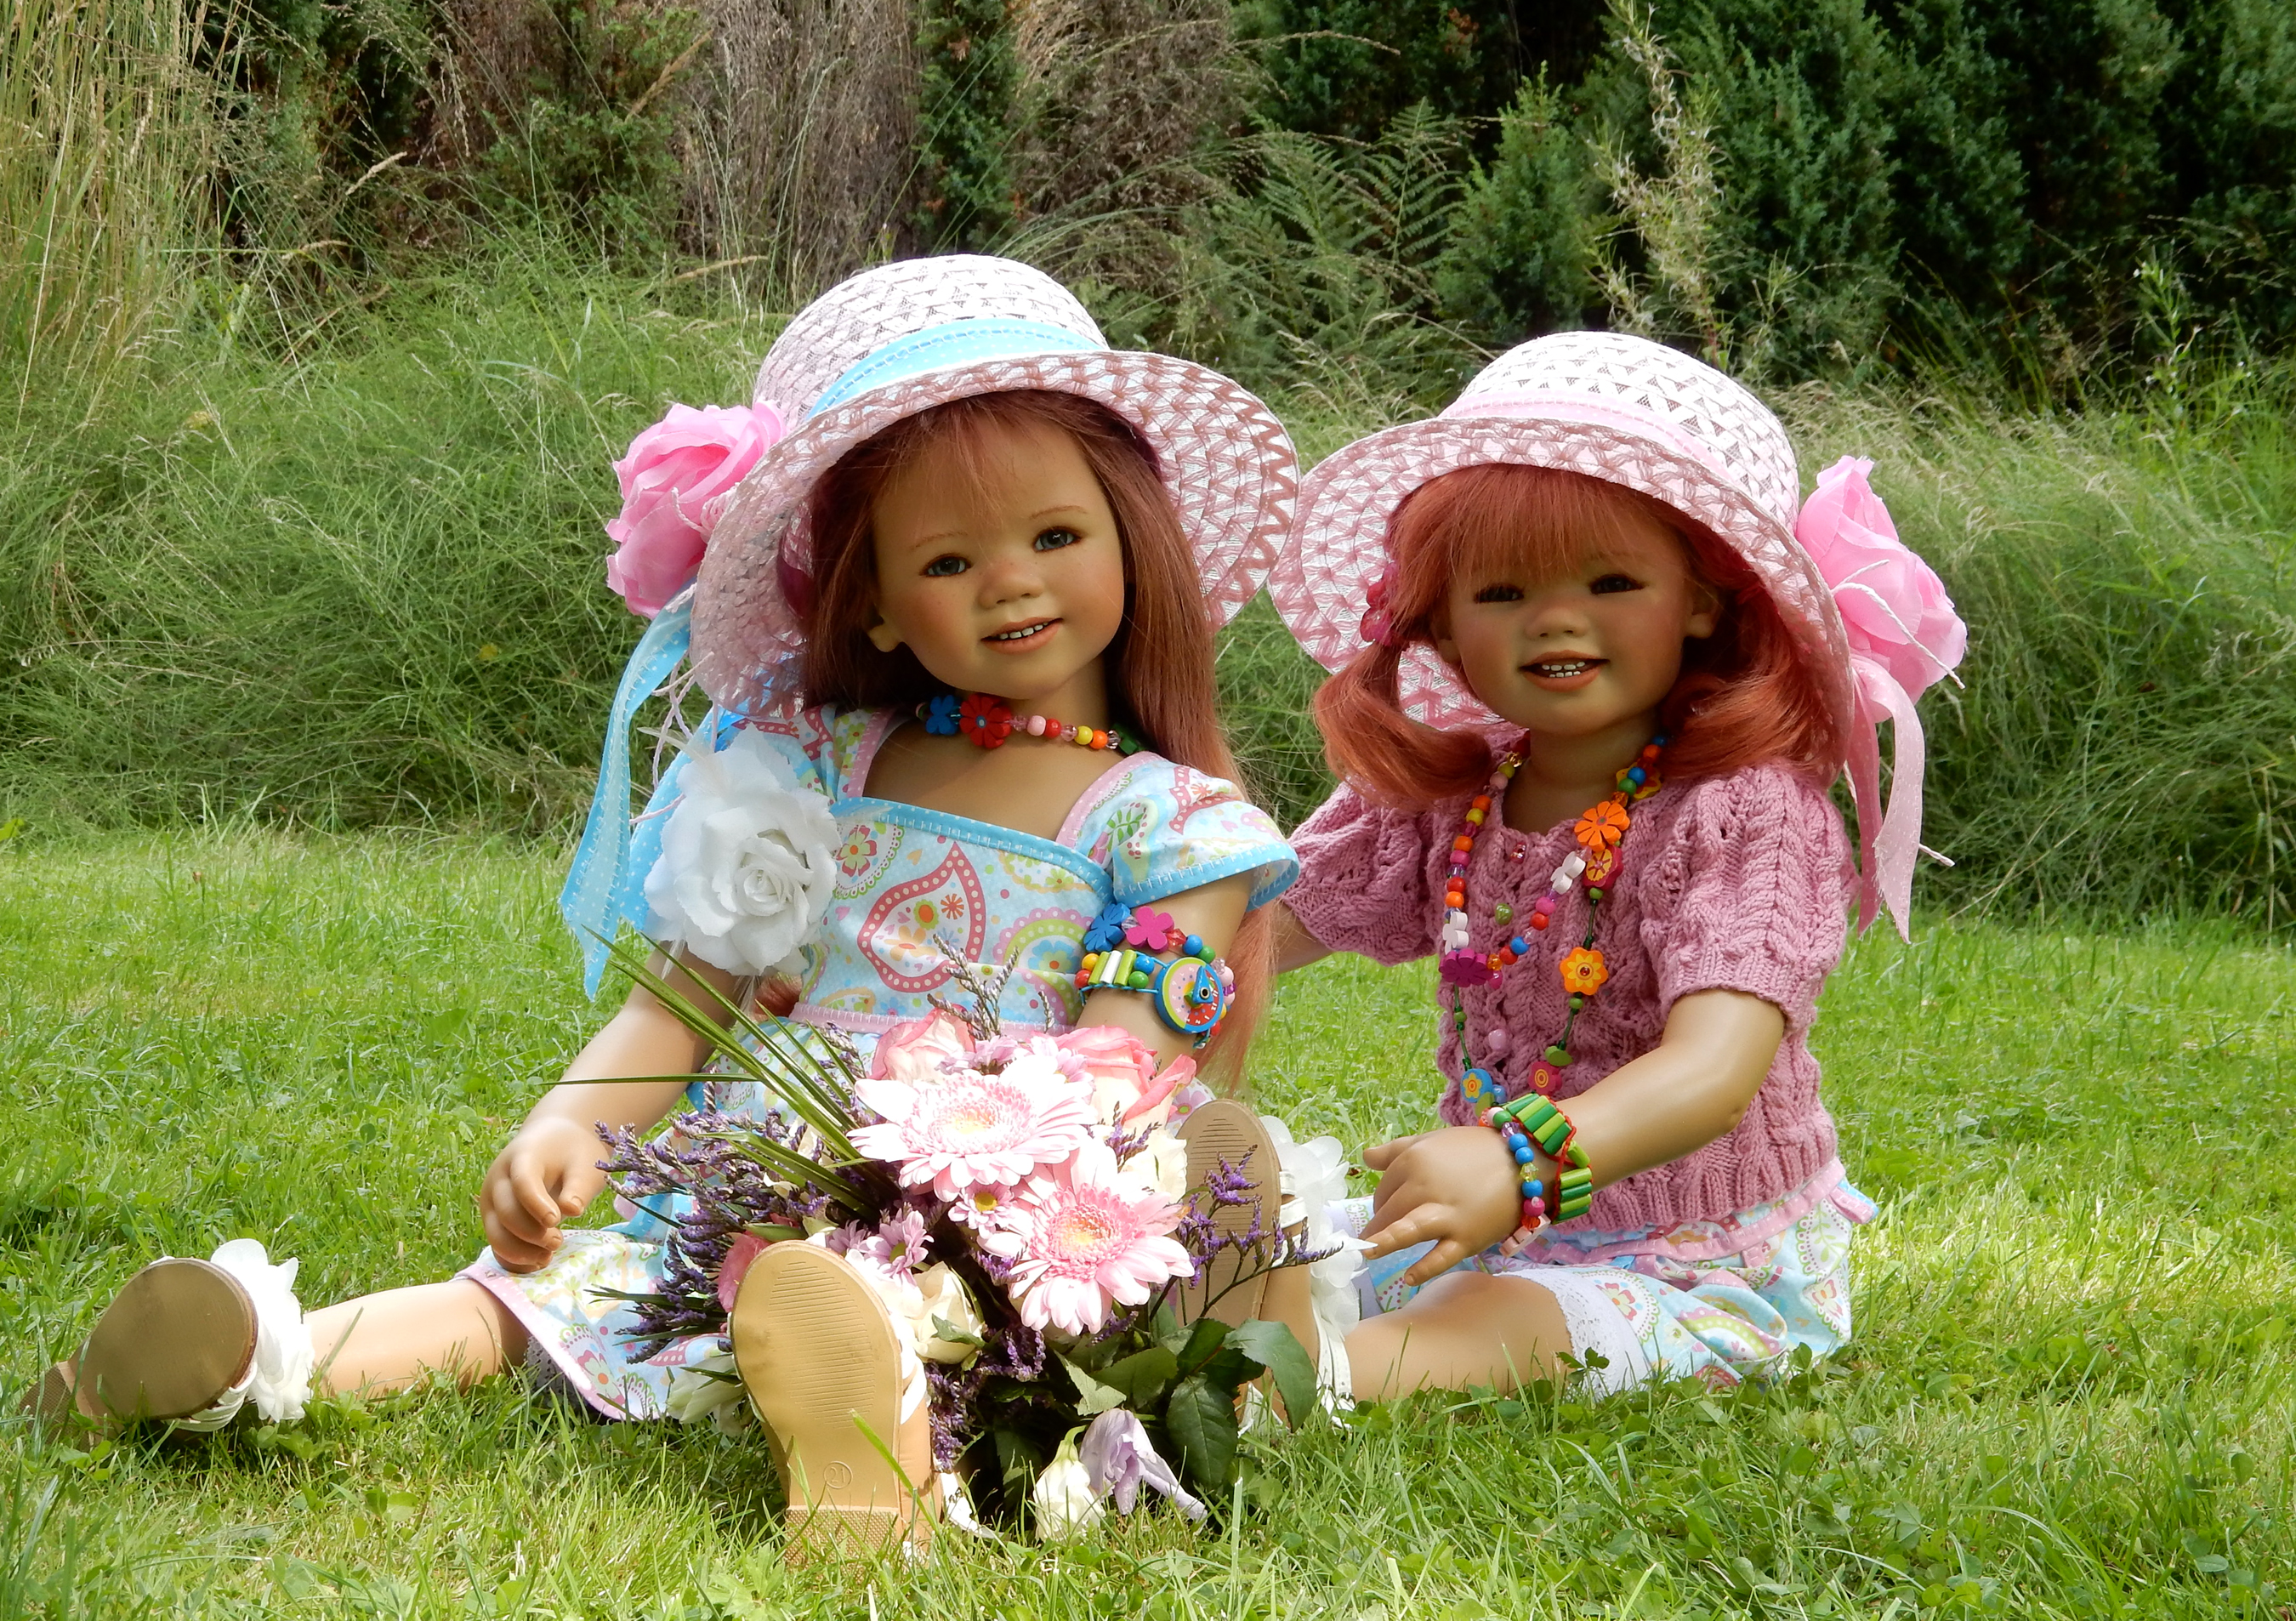 Картинка девочка с куклой. Куклы для девочек. Две куклы для детей. Кукла для девочек 2. Шляпка для куклы.